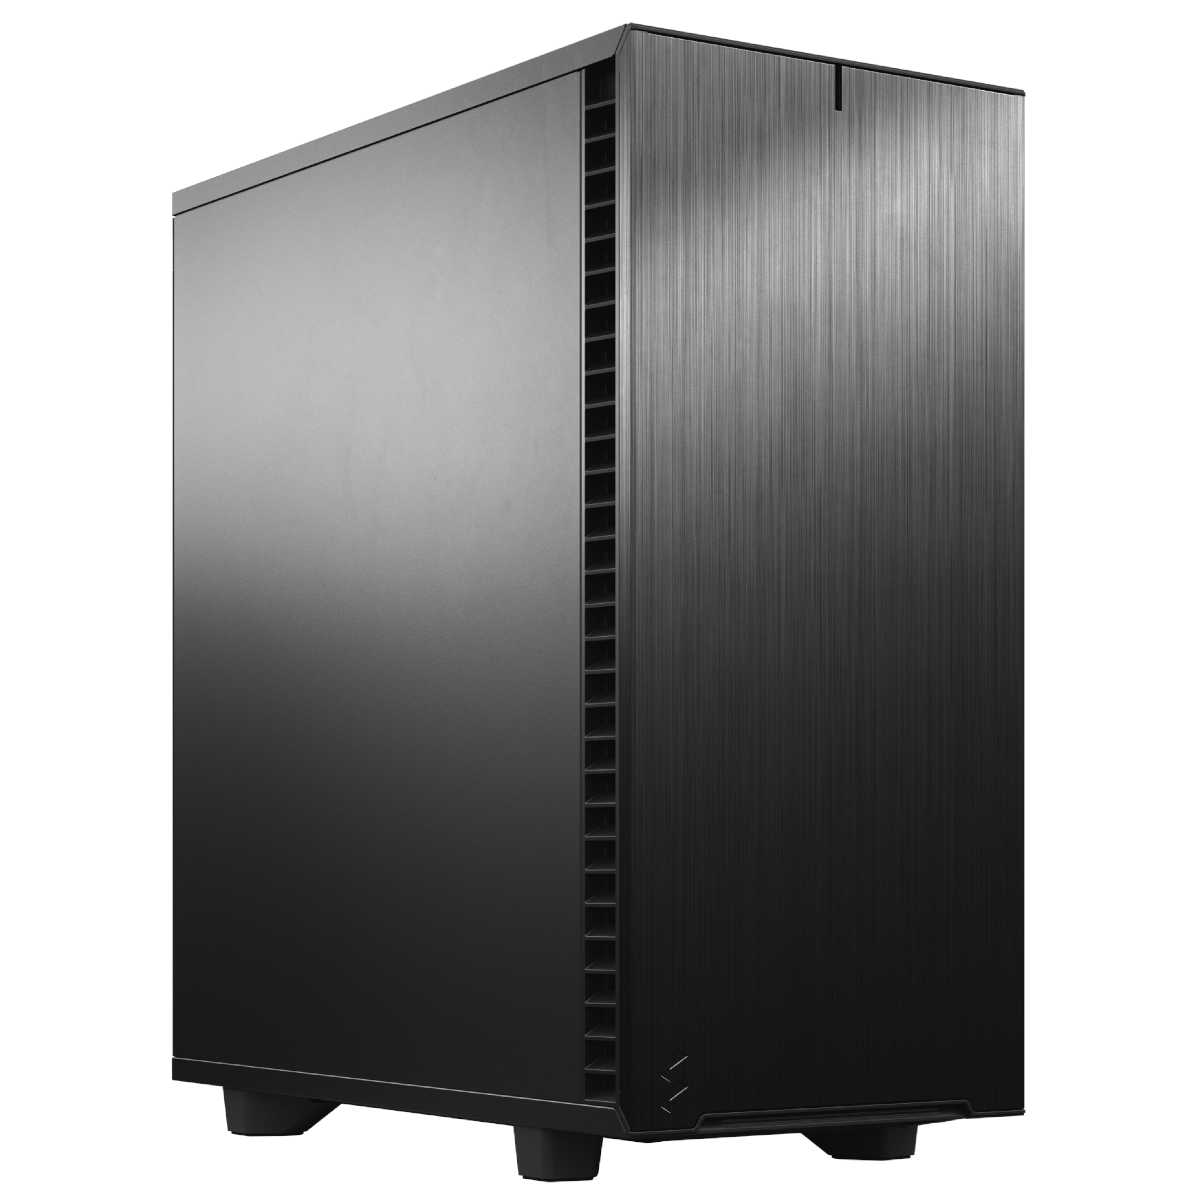 Fractal Design Define 7 Compact Mid-Tower Case - Black